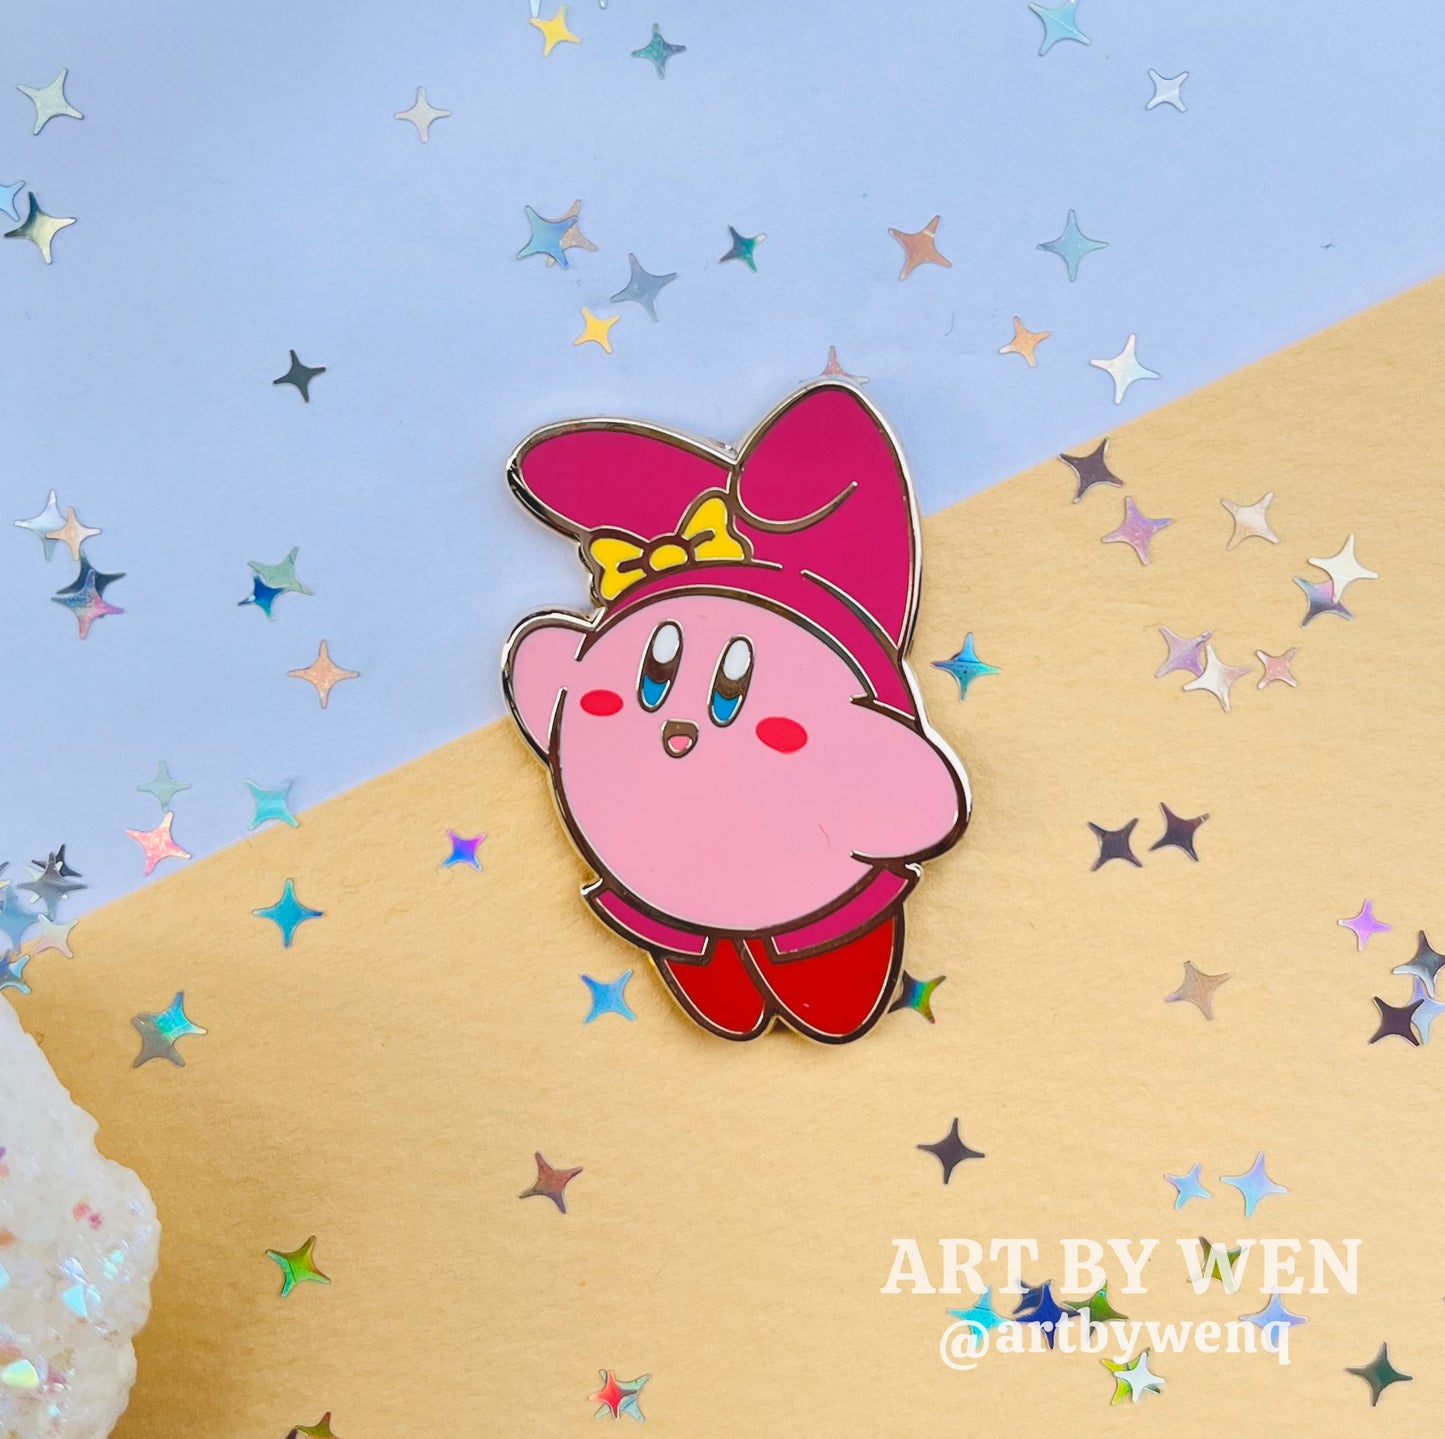 Kirby Transformation Vol.2 Enamel Pin